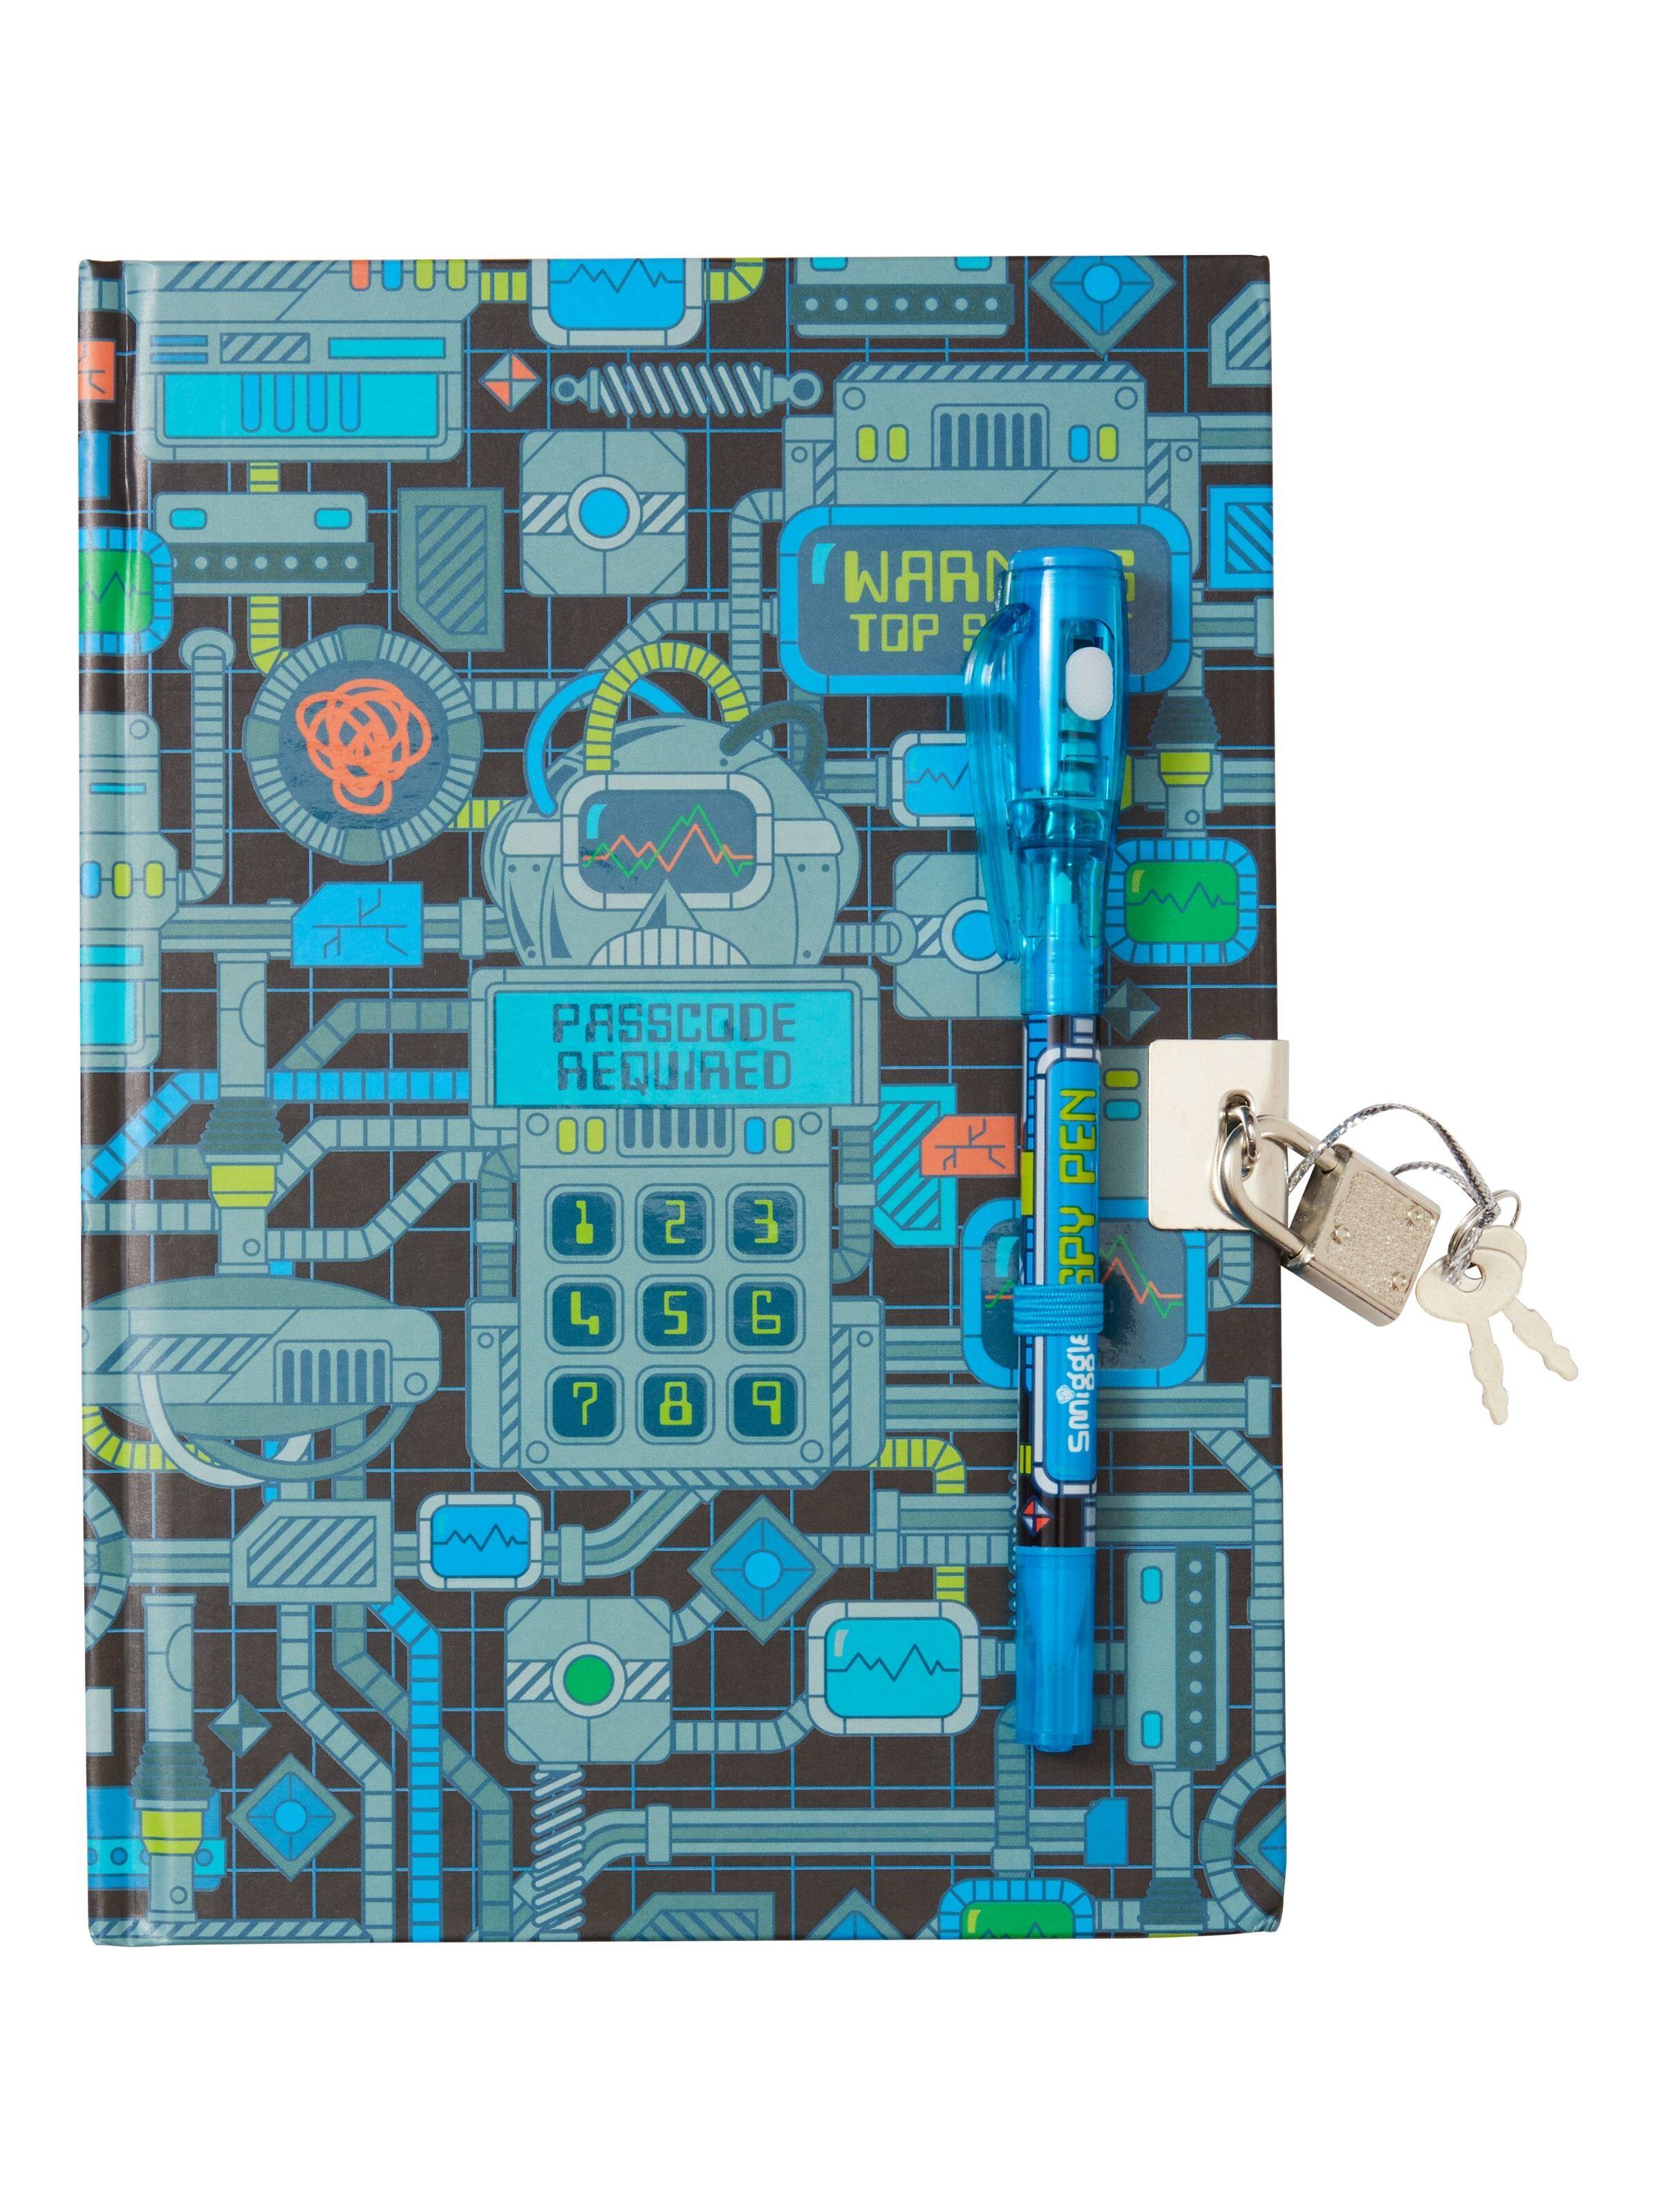 Secret A5 Lockable Notebook With Spy Pen